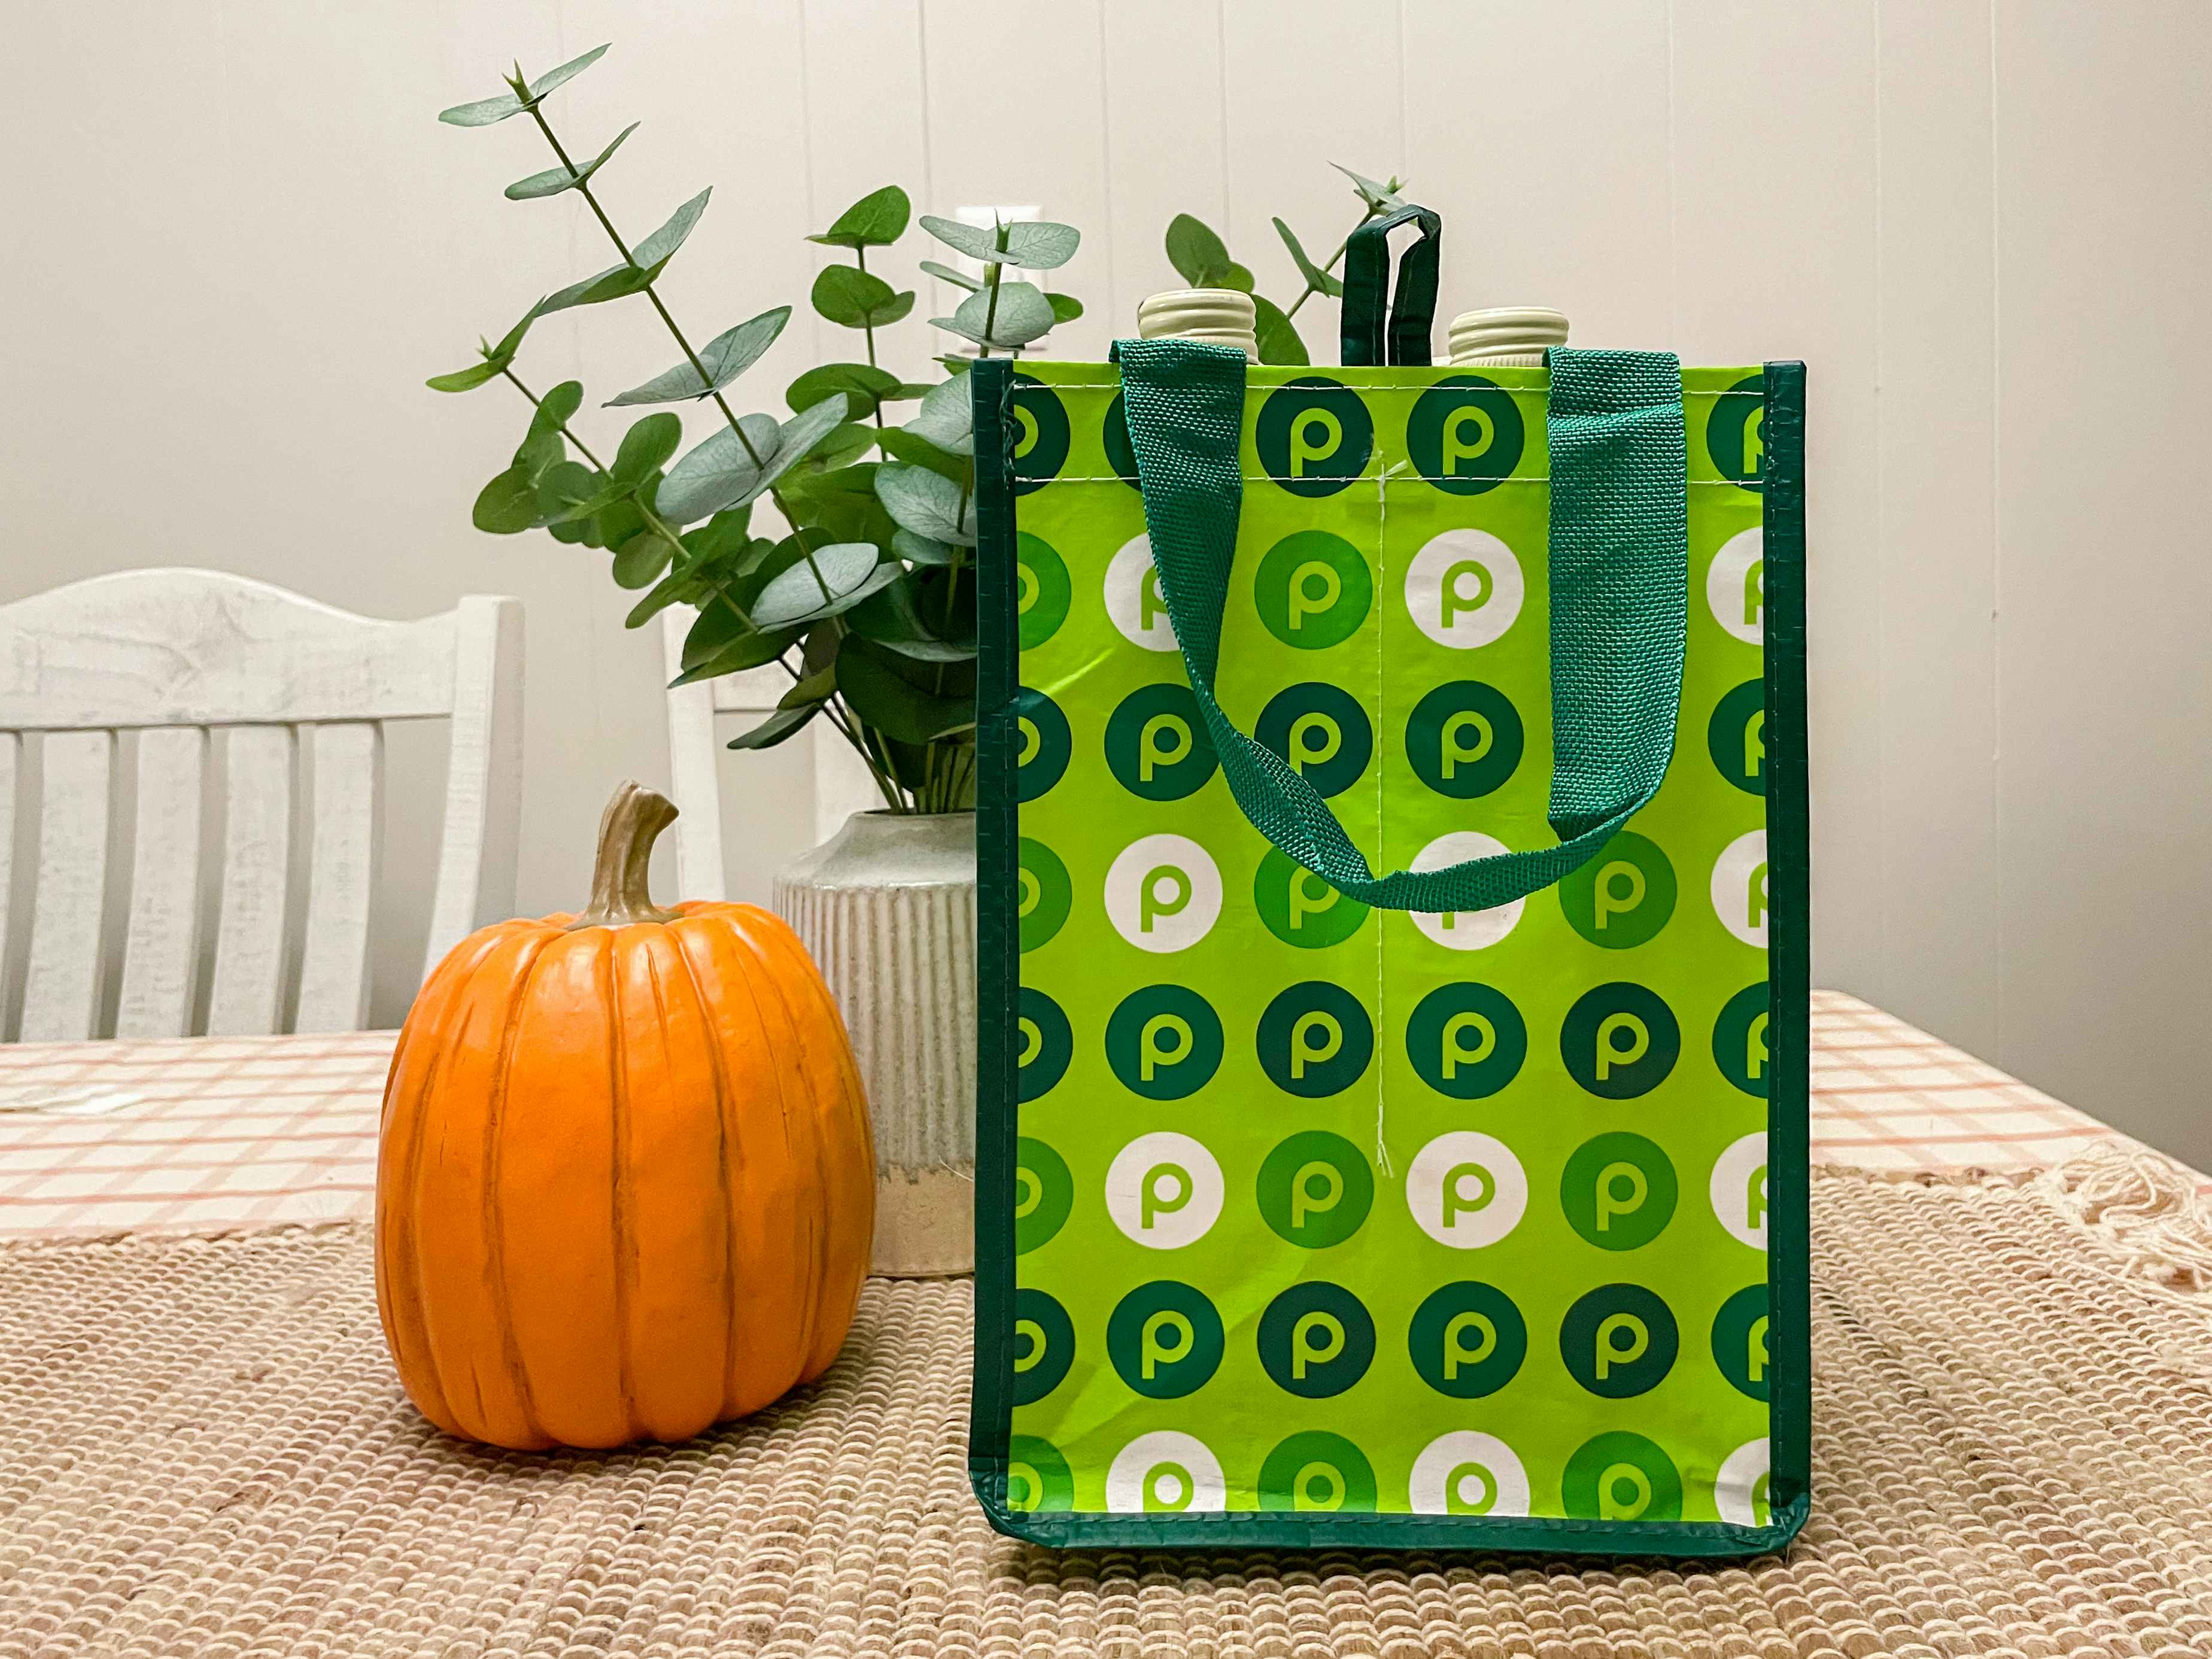 A Publix reusable wine bag on a table next to a pumpkin